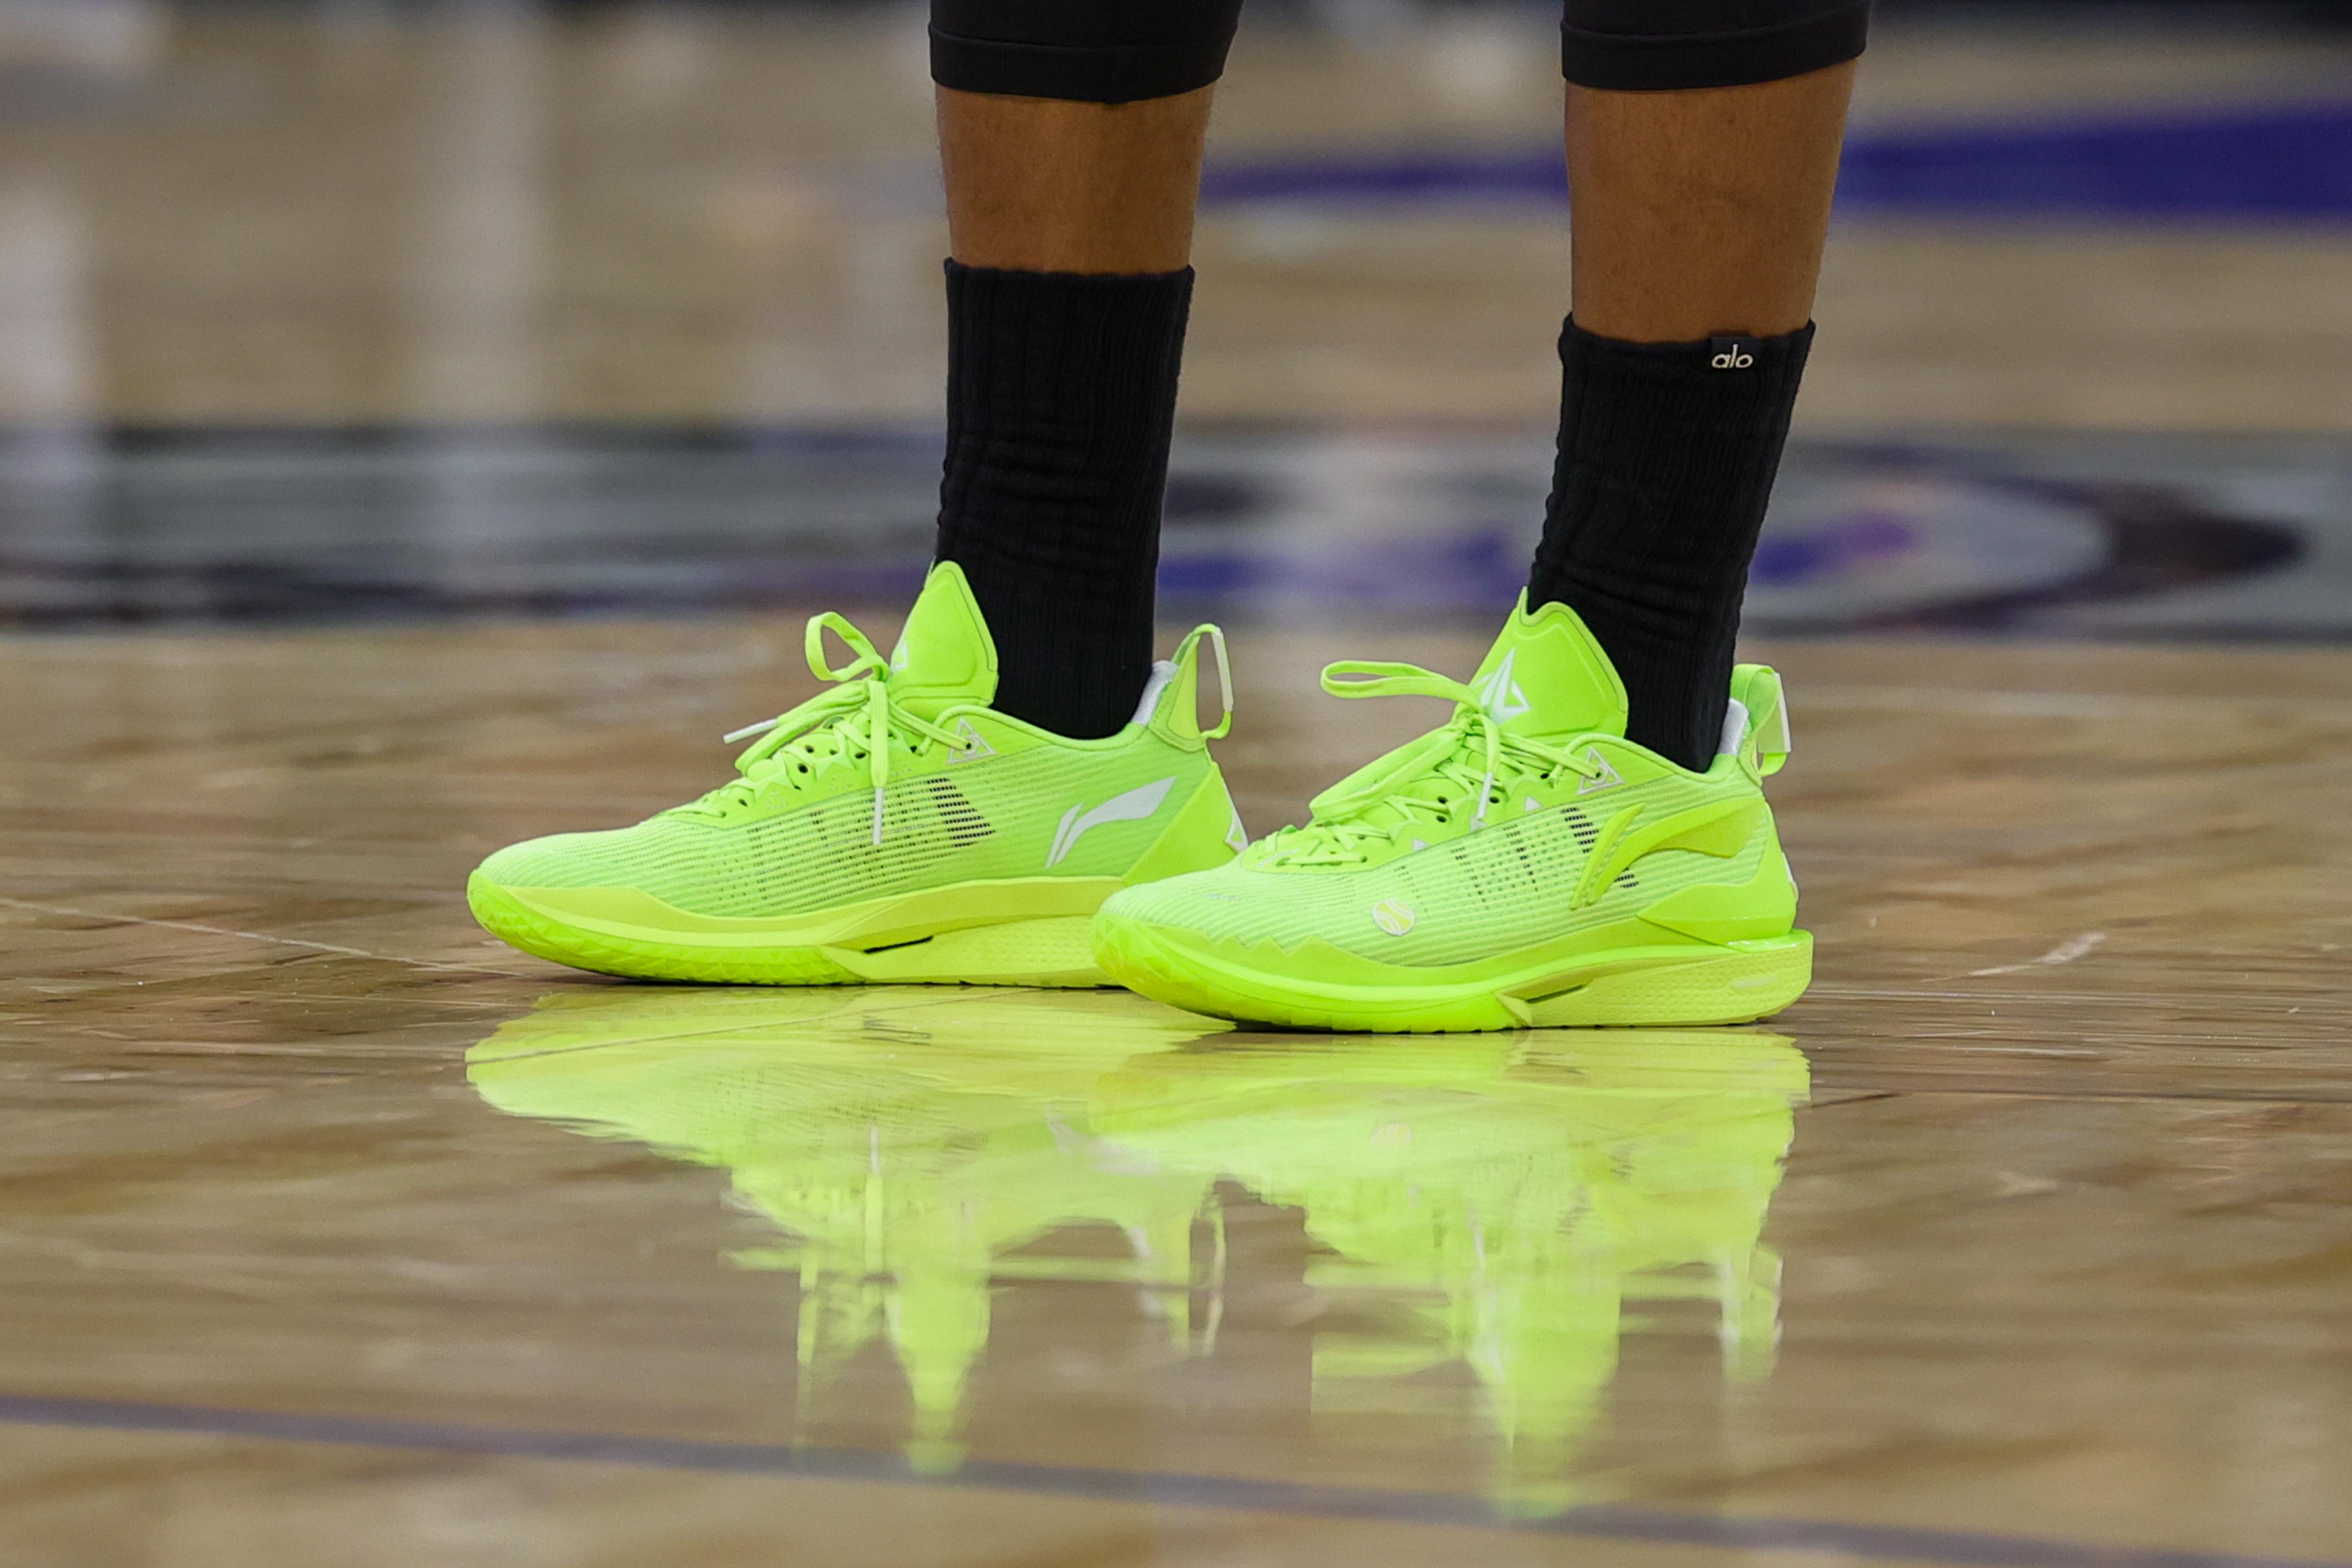 Miami Heat forward Jimmy Butler's green Li-Ning sneakers.